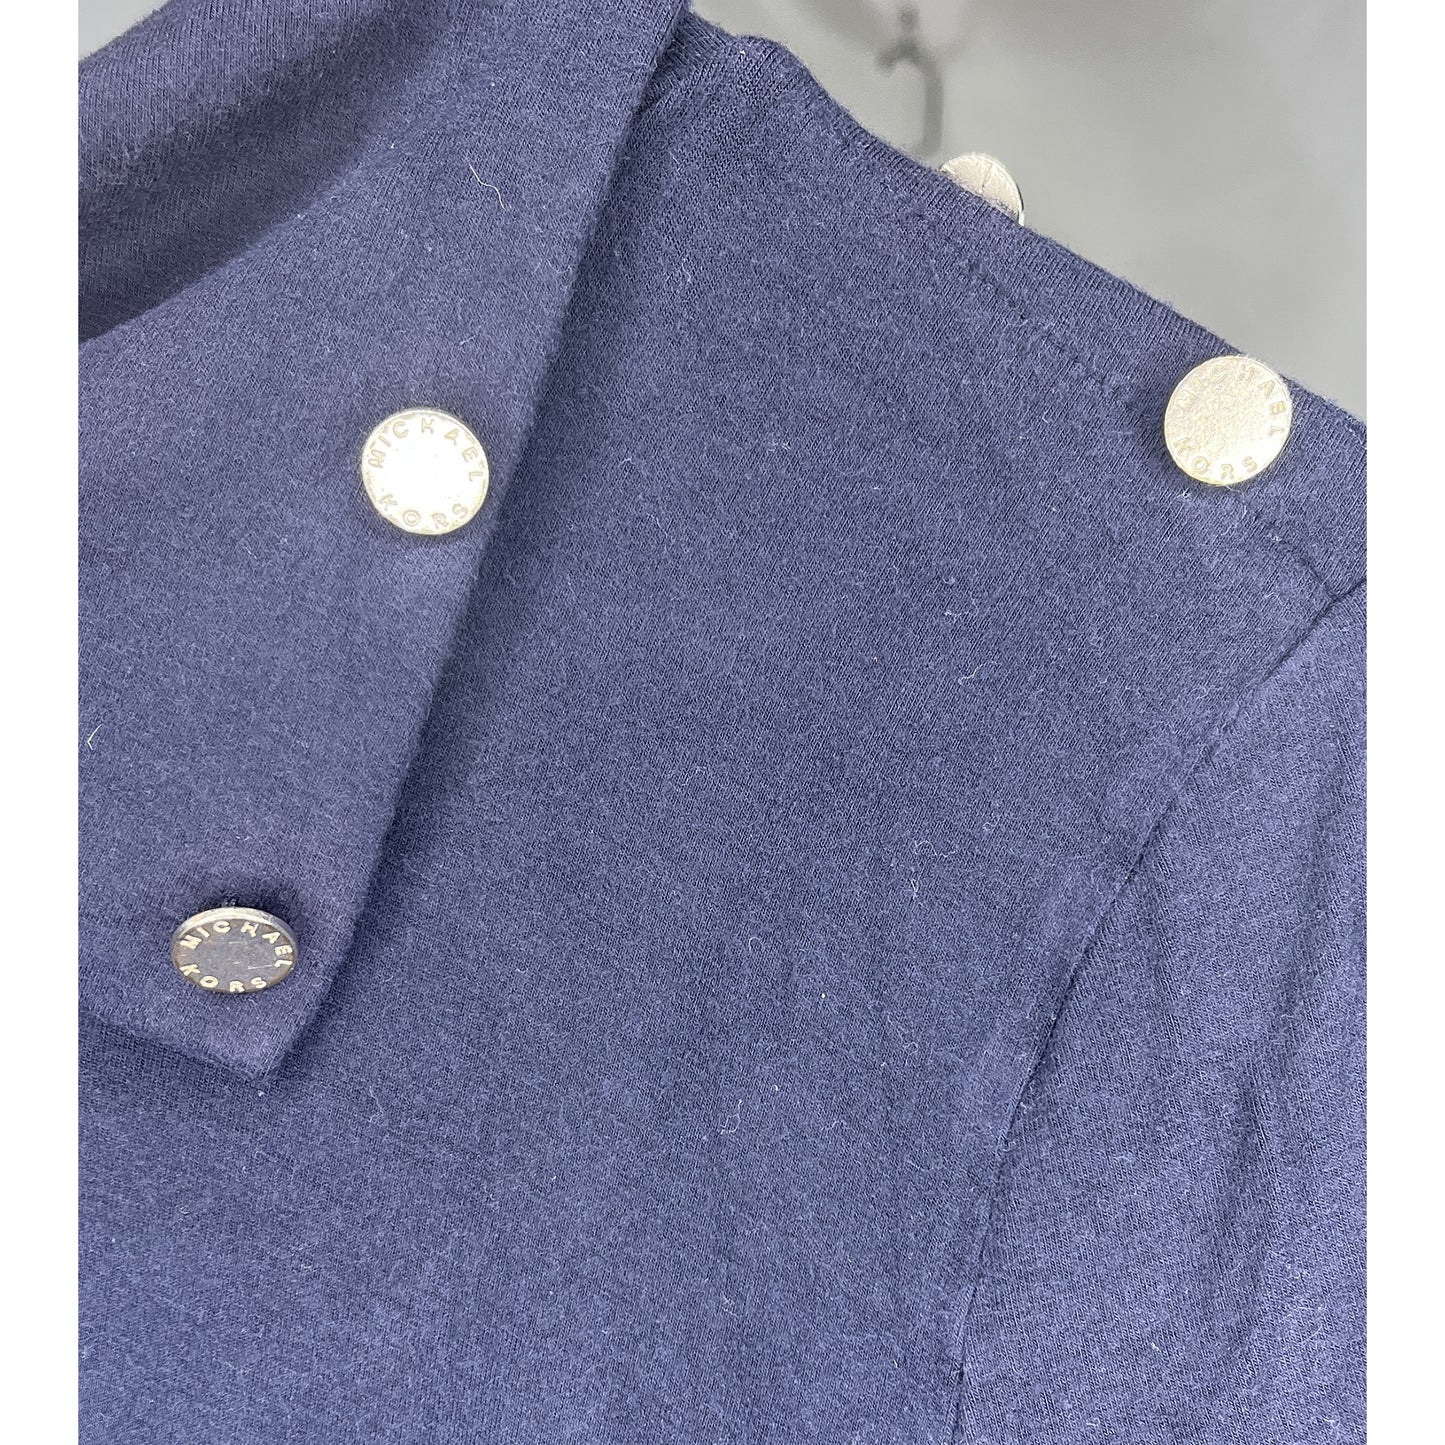 Michael Kors Top Short Sleeve Turtle Neck w Button Detail Navy, Silver Size L SKU 000418